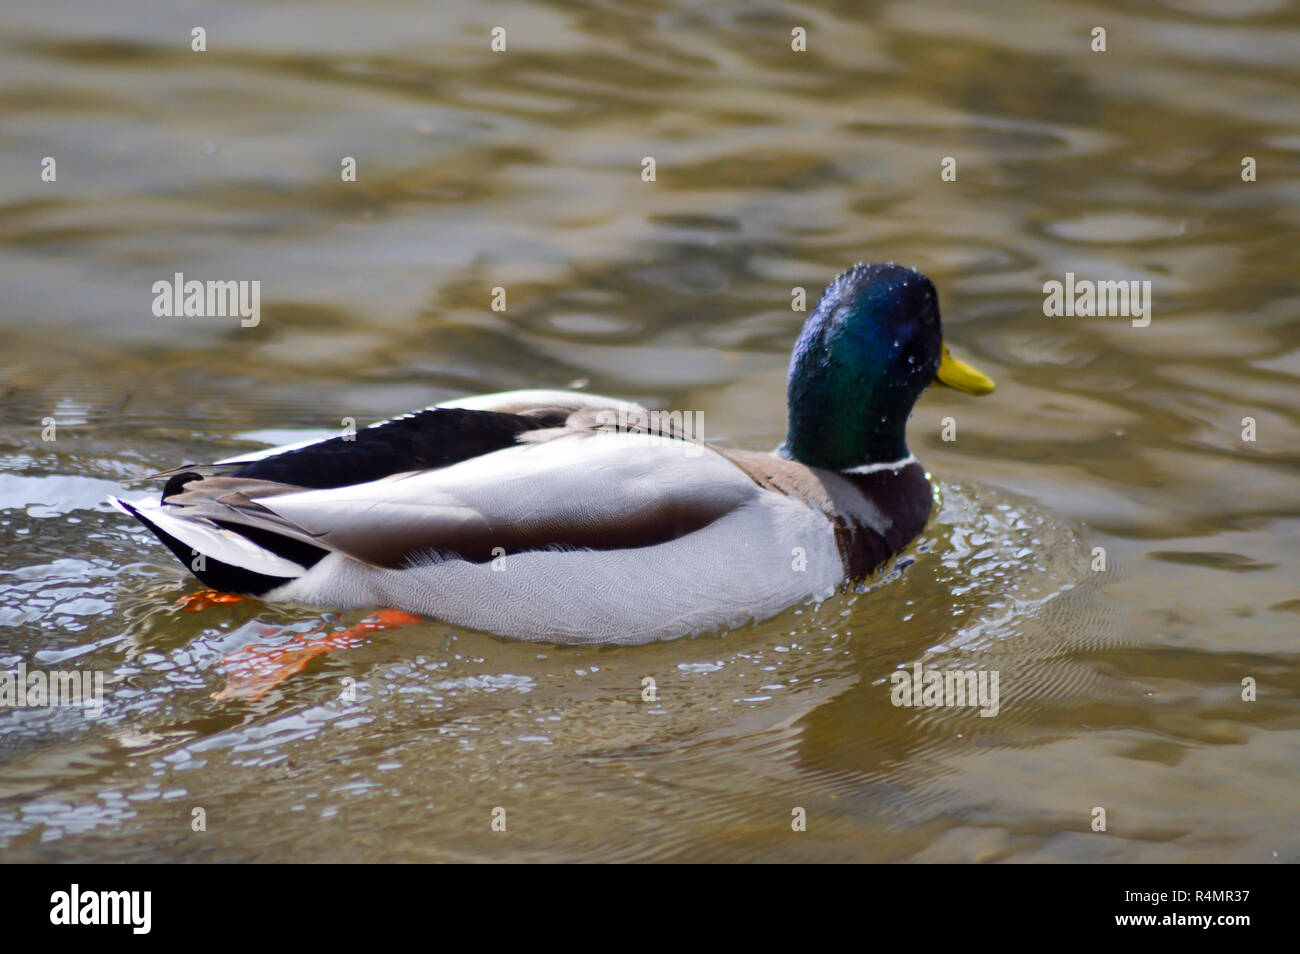 Pato con collar verde en un tanque de agua Fotografía de stock - Alamy